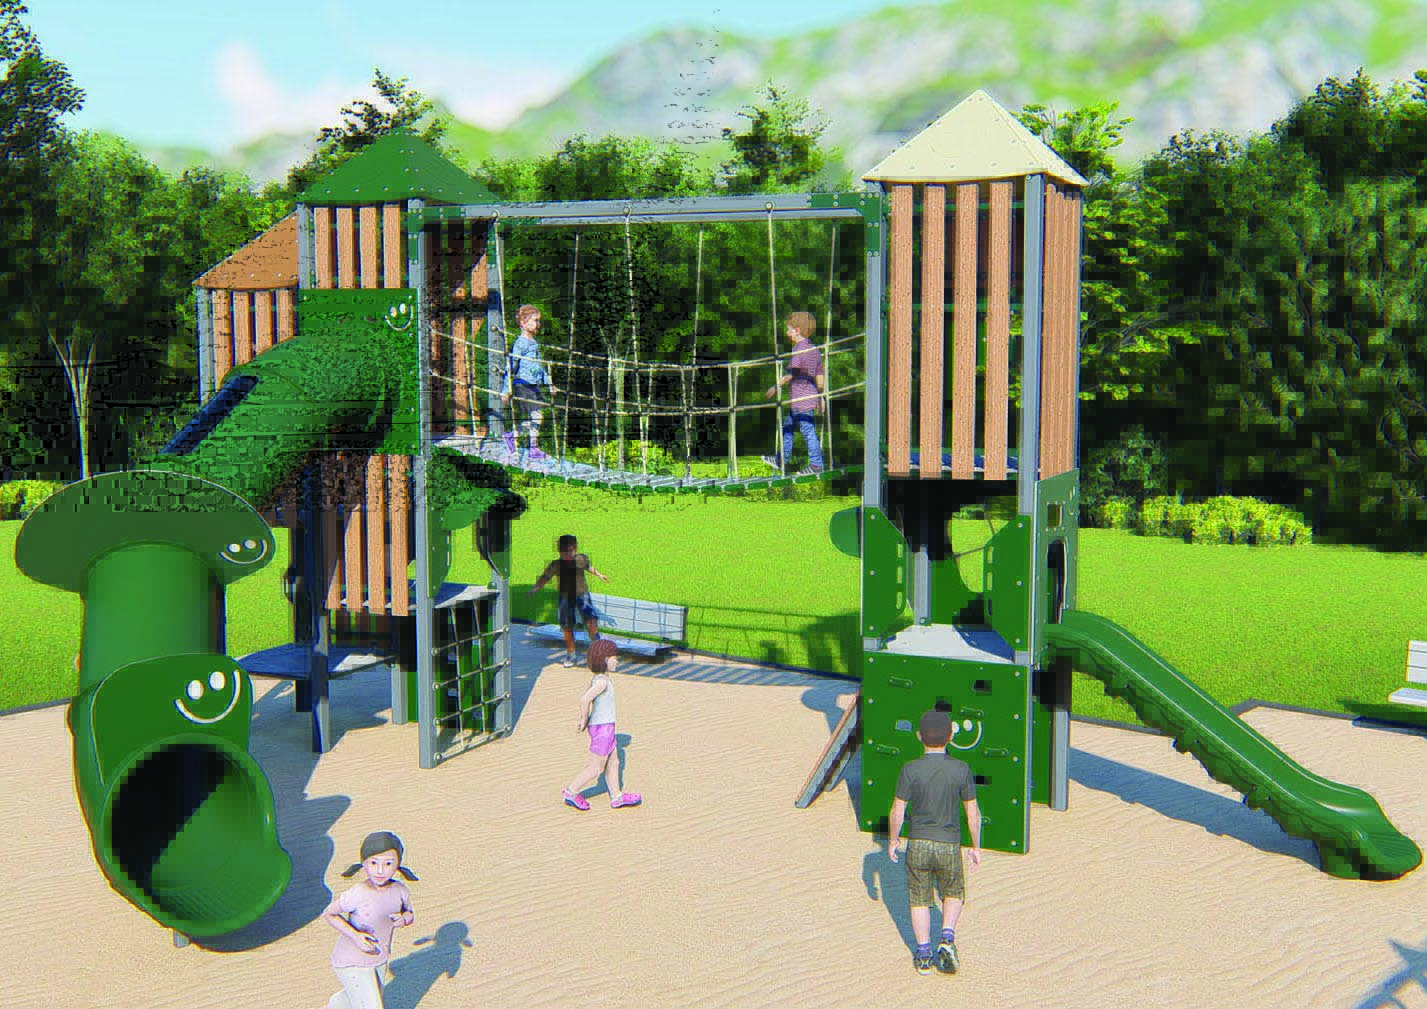 New playground concept